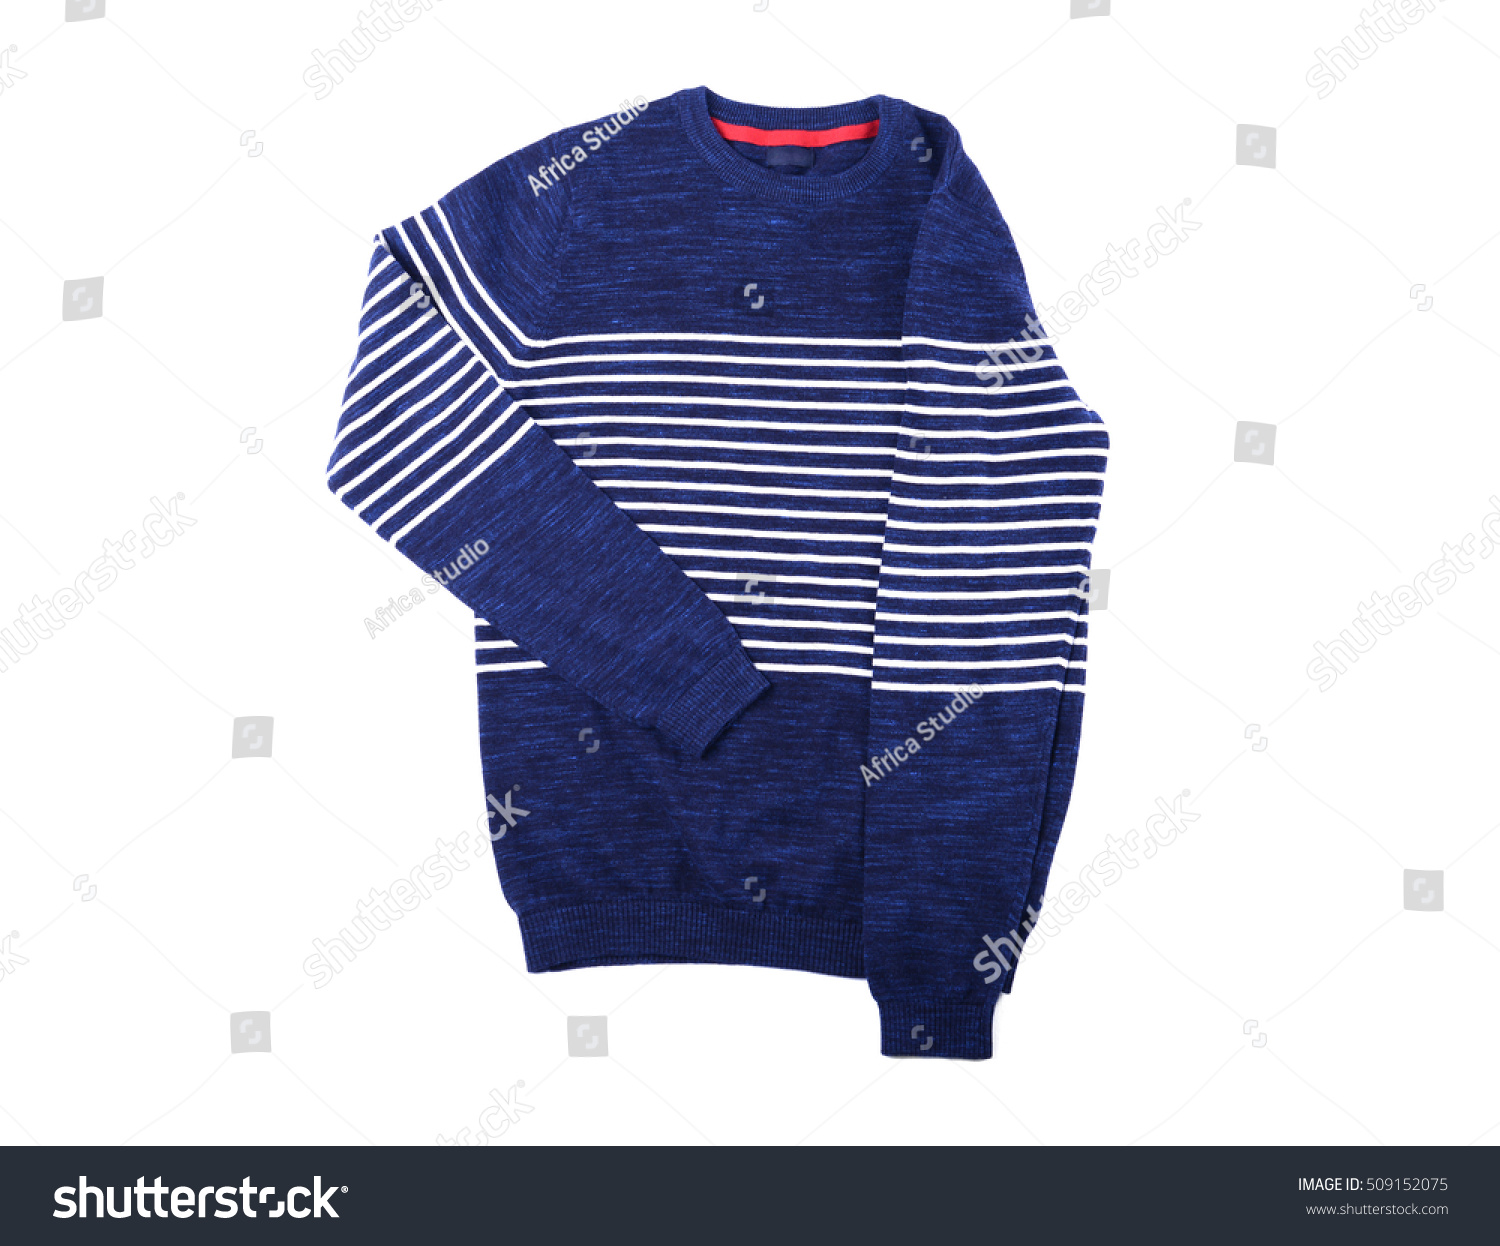 Warm Sweater On White Background Stock Photo 509152075 : Shutterstock